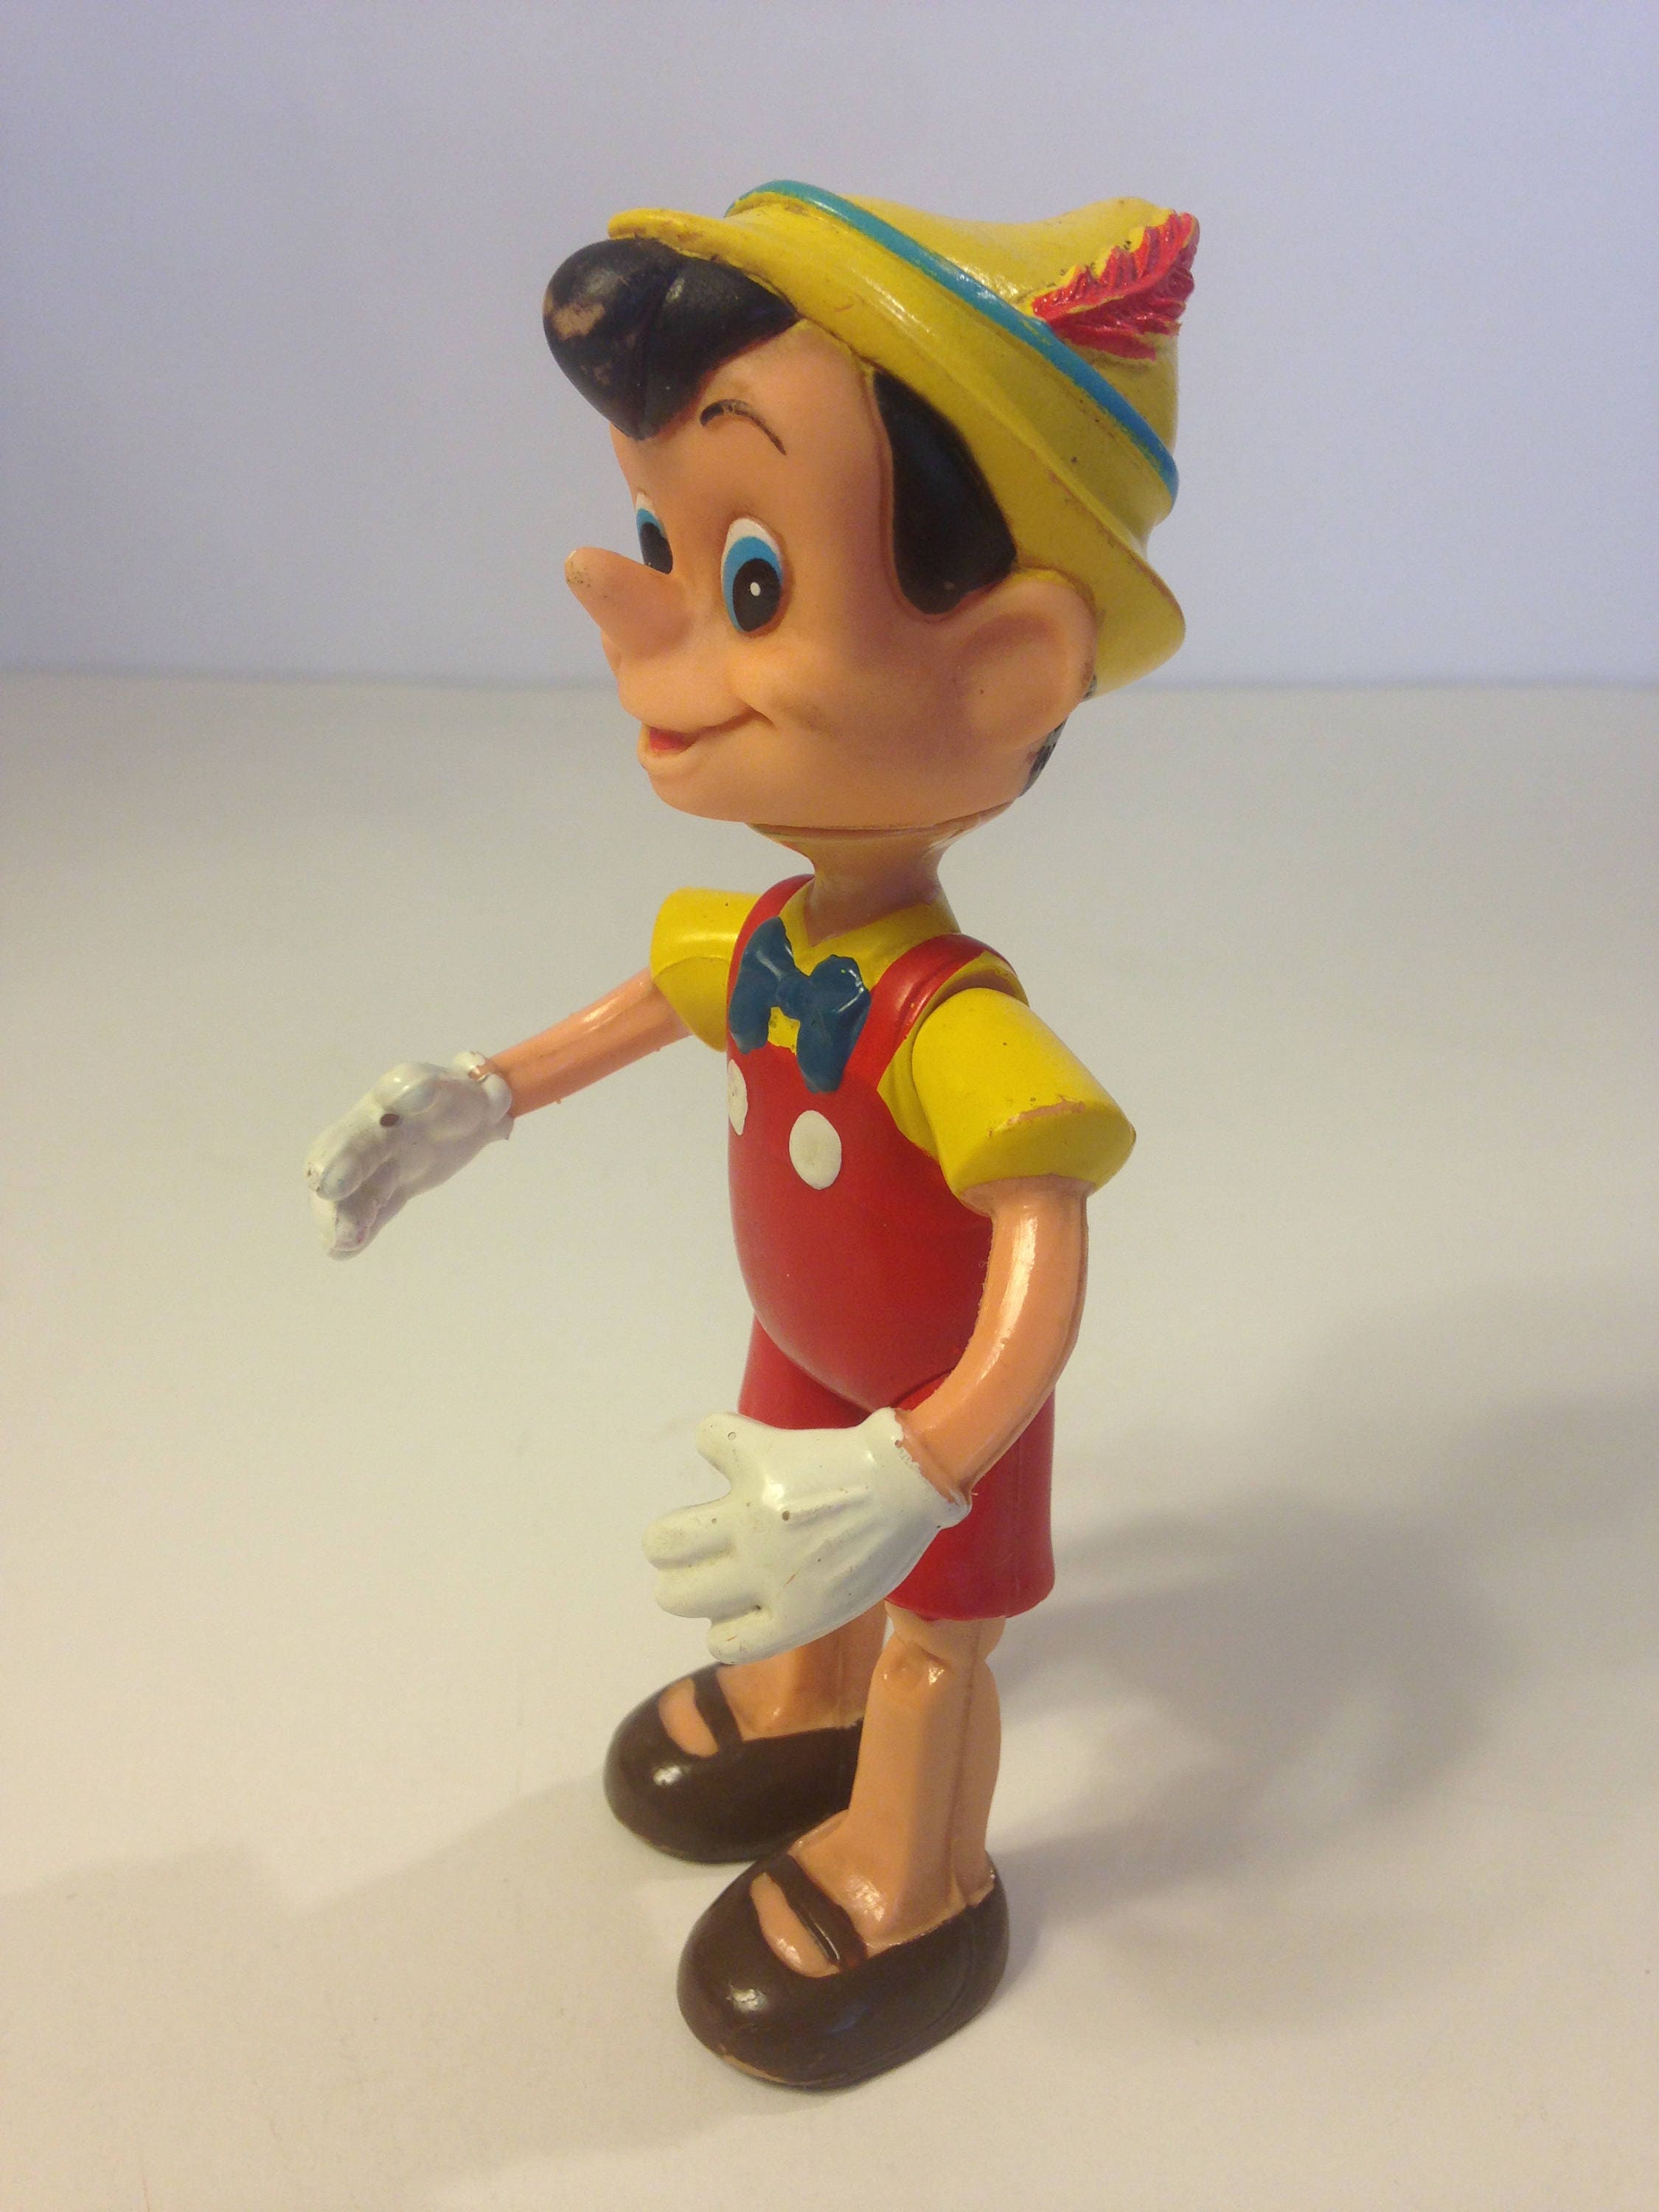 Pinocchio (Série TV) - Figurine magnétique - Pinocchio sur Skateboard -  Magneto Ref.3143 (1977)